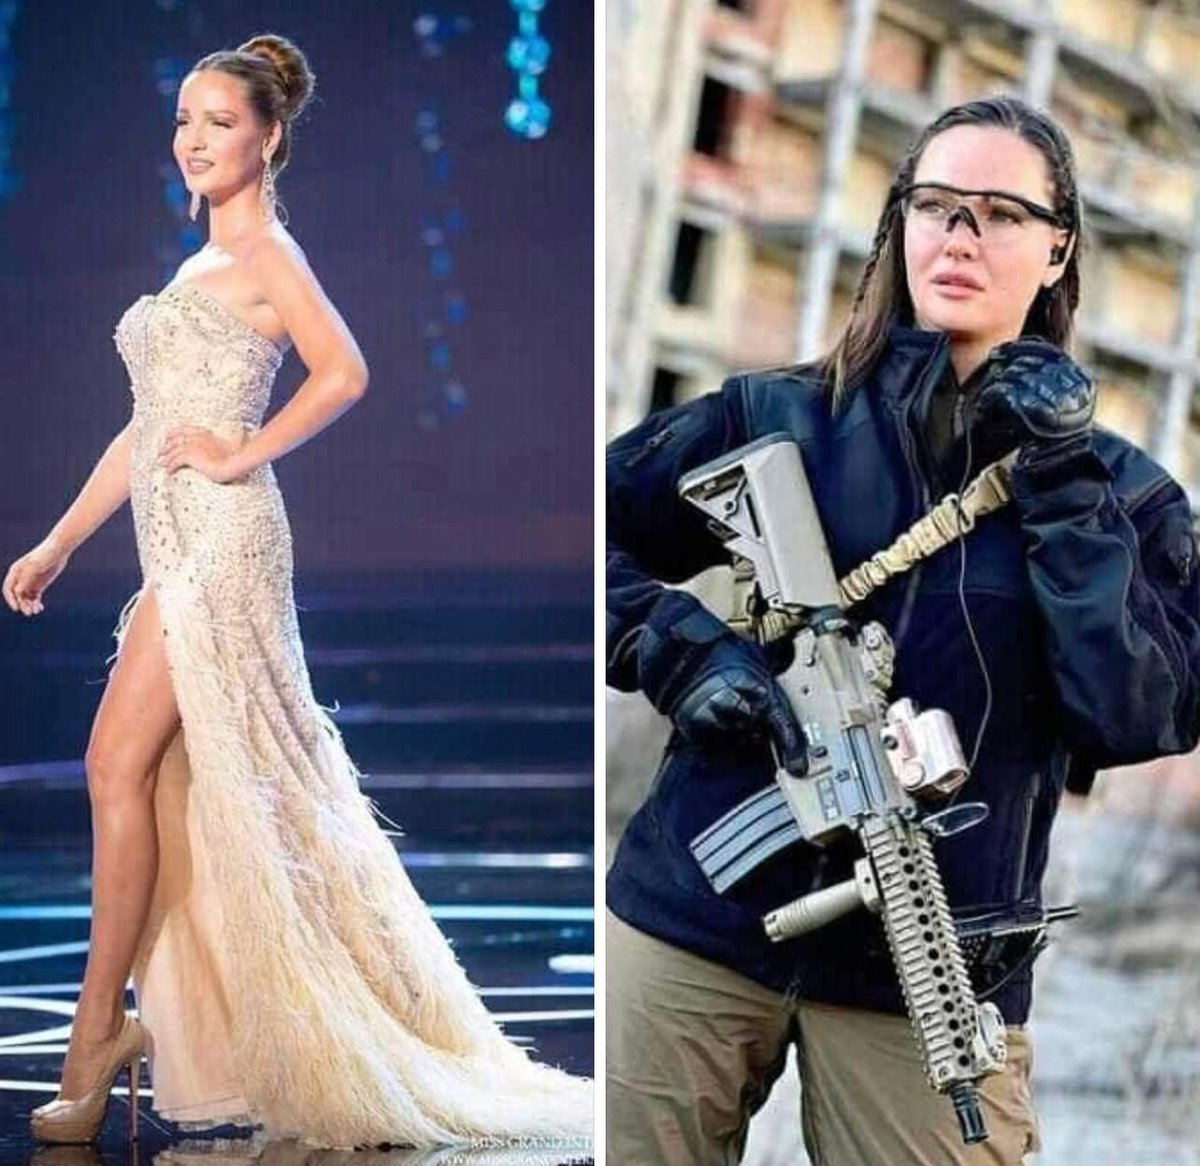 RT @bingley567: Miss Ukraine 2015 doesn't have fucking bone spurs.
#Ukraine #GOPtheRussianParty https://t.co/3Vl7M9SIac